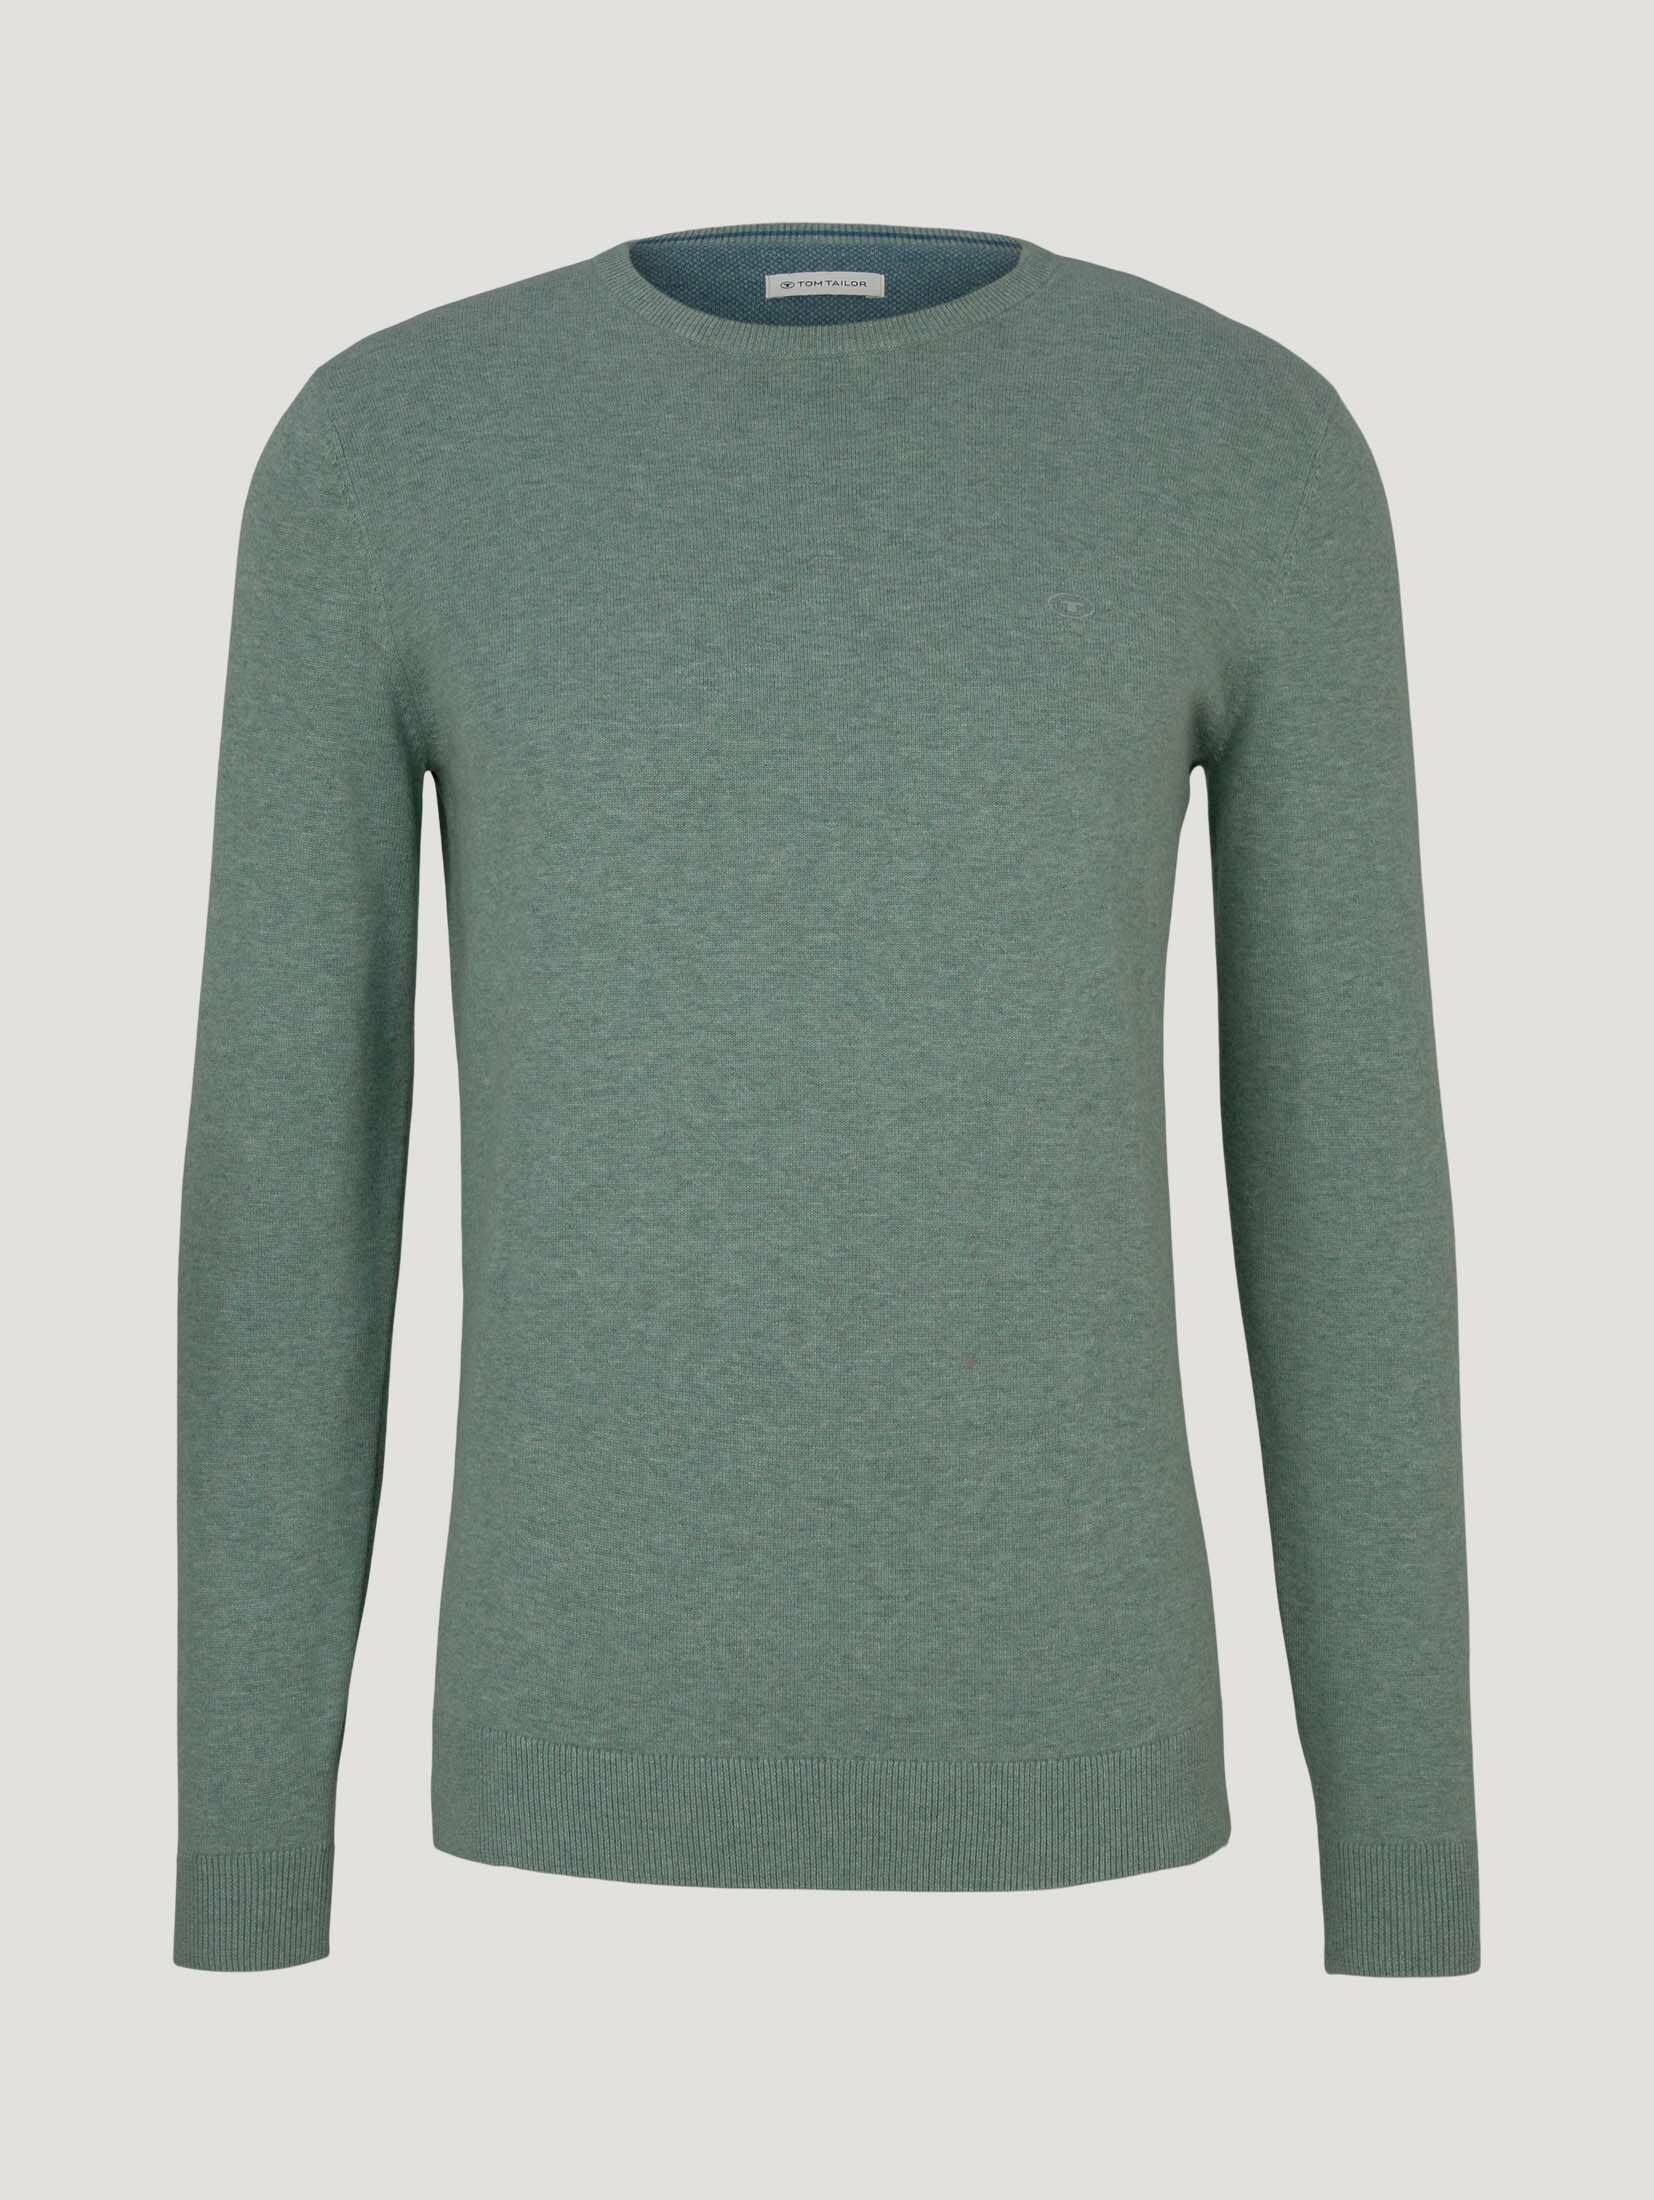 Пуловер Tom Tailor Tom Tailor Strick, зеленый пуловер tom tailor размер s зеленый